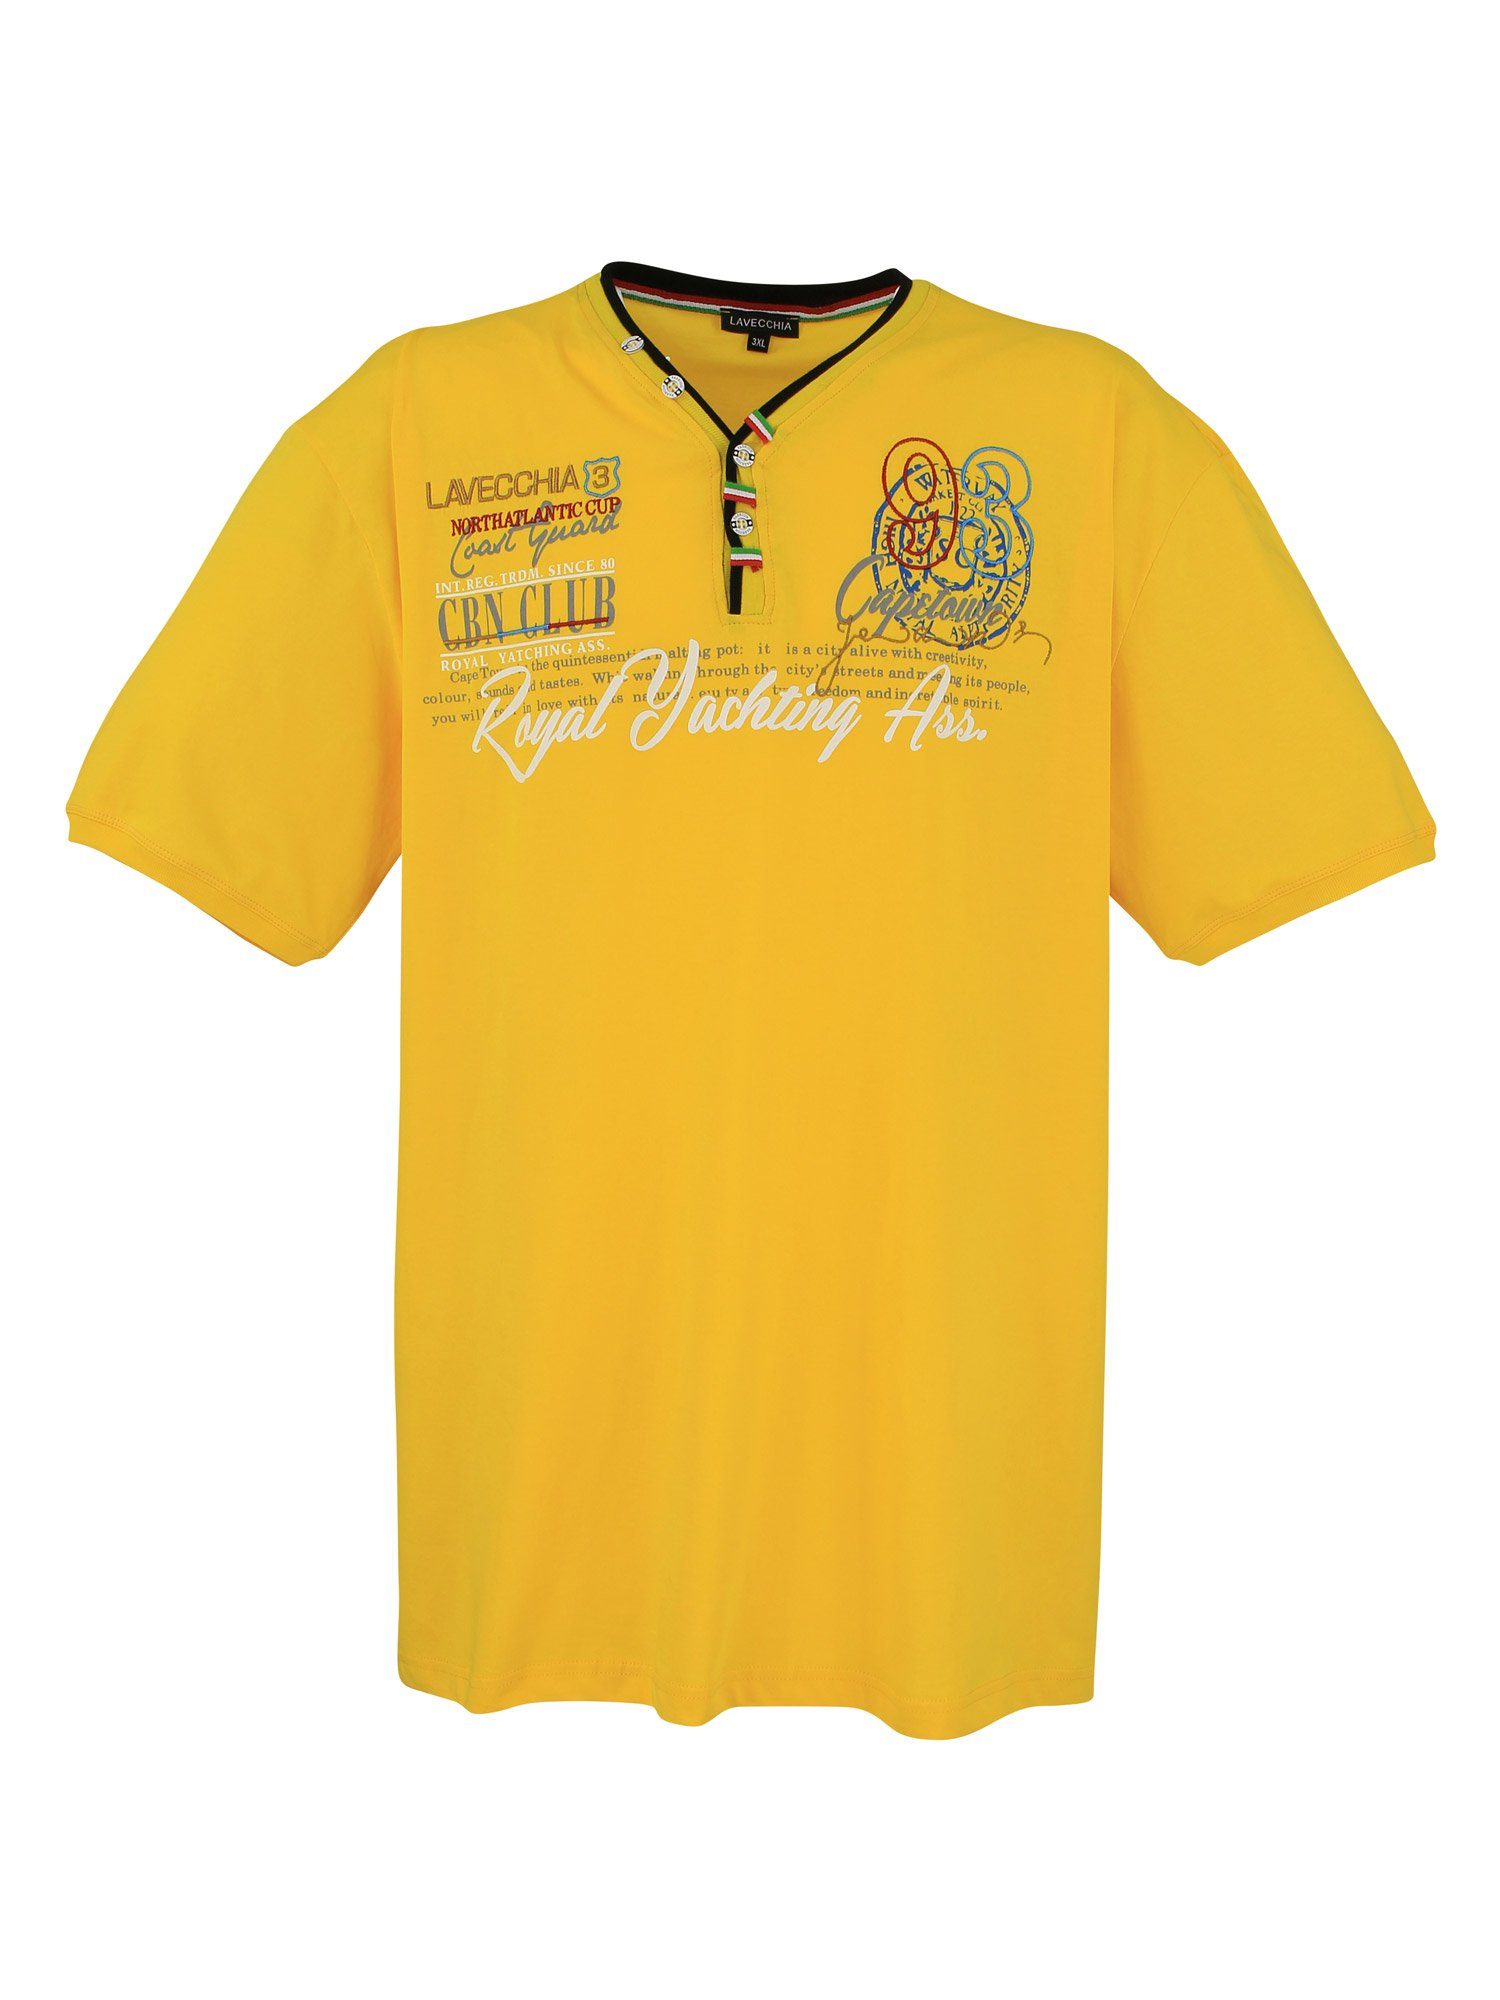 Lavecchia T-Shirt Übergrößen Herren V-Shirt LV-608 Herrenshirt V-Ausschnitt gelb